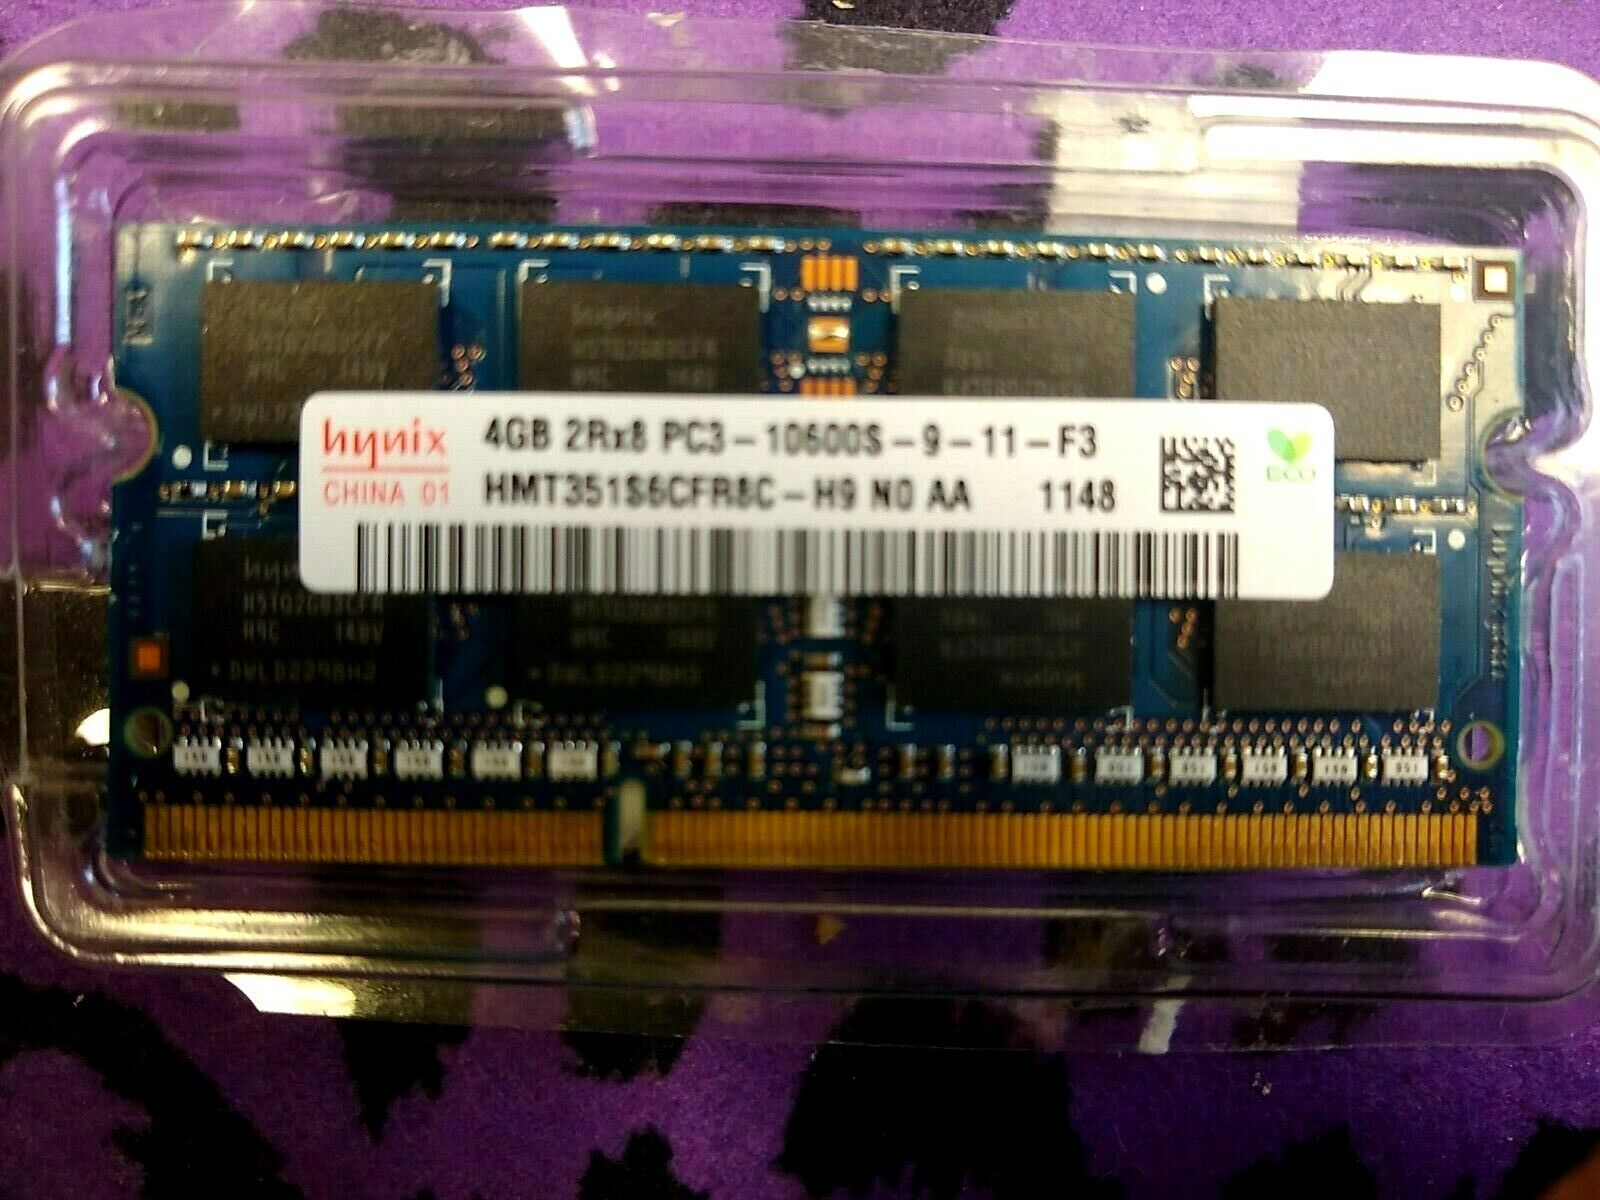 Hynix 4GB SO-DIMM 1333 MHz DDR3 106000S 9-11-F3 SDRAM Memory (HMT351S6BFR8C-H9)